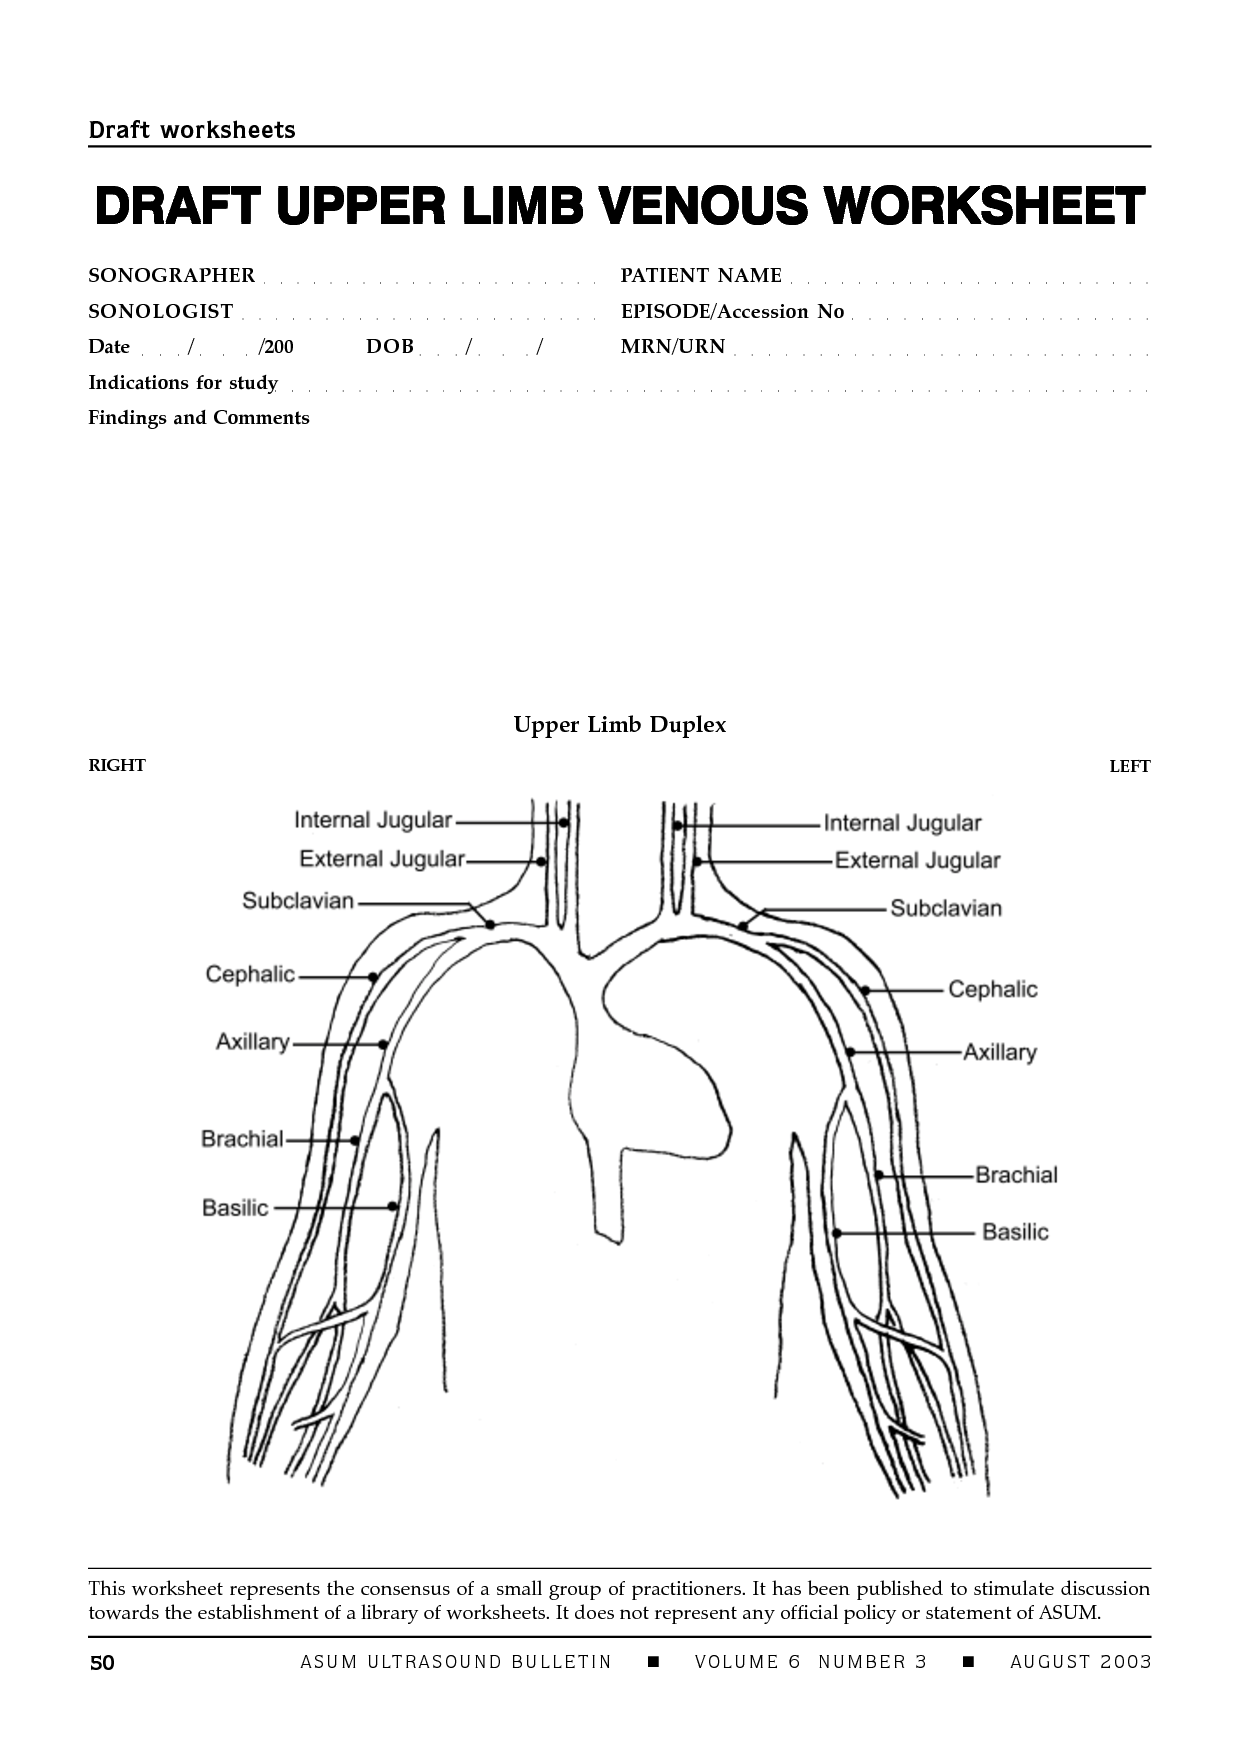 Upper Extremity Arterial Ultrasound Worksheet Image